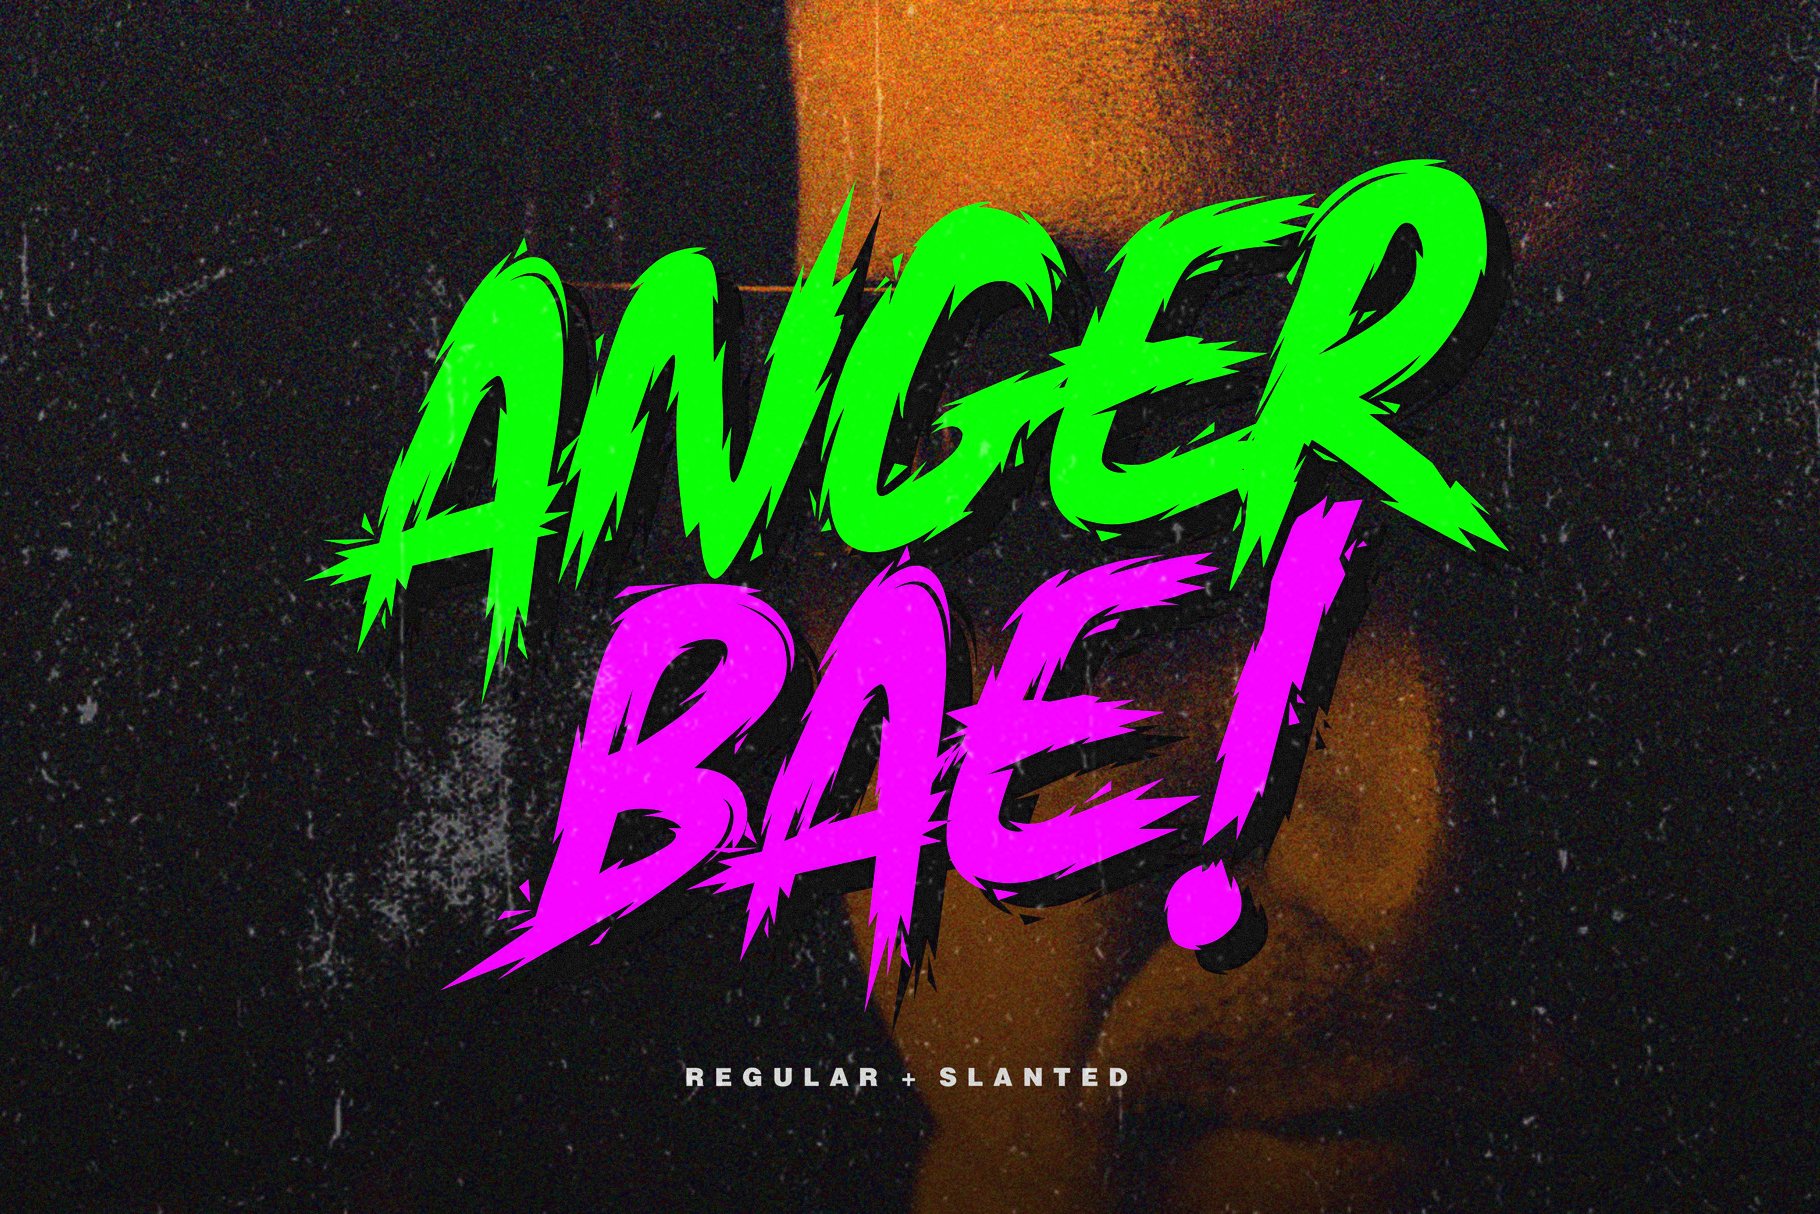 Anger Bae Font | Regular and Slanted cover image.